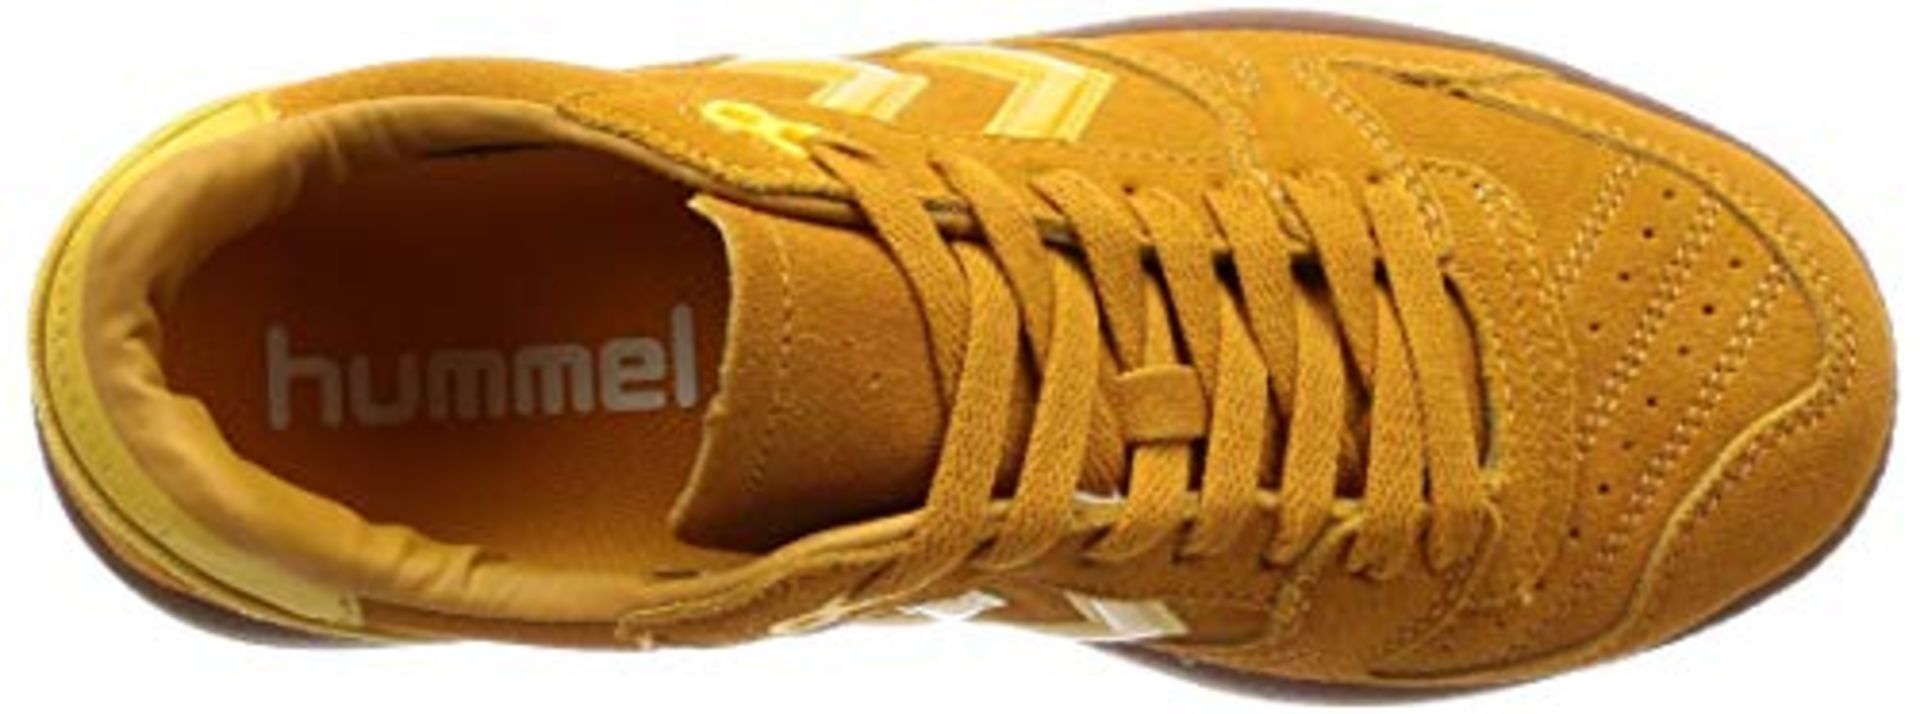 1 x Hummel Hb Team - Sunflower - Men's Lifestyle Shoes, Men, HM201937, 40 Size: 6.5 UK | EAN: 57004 - Image 6 of 8